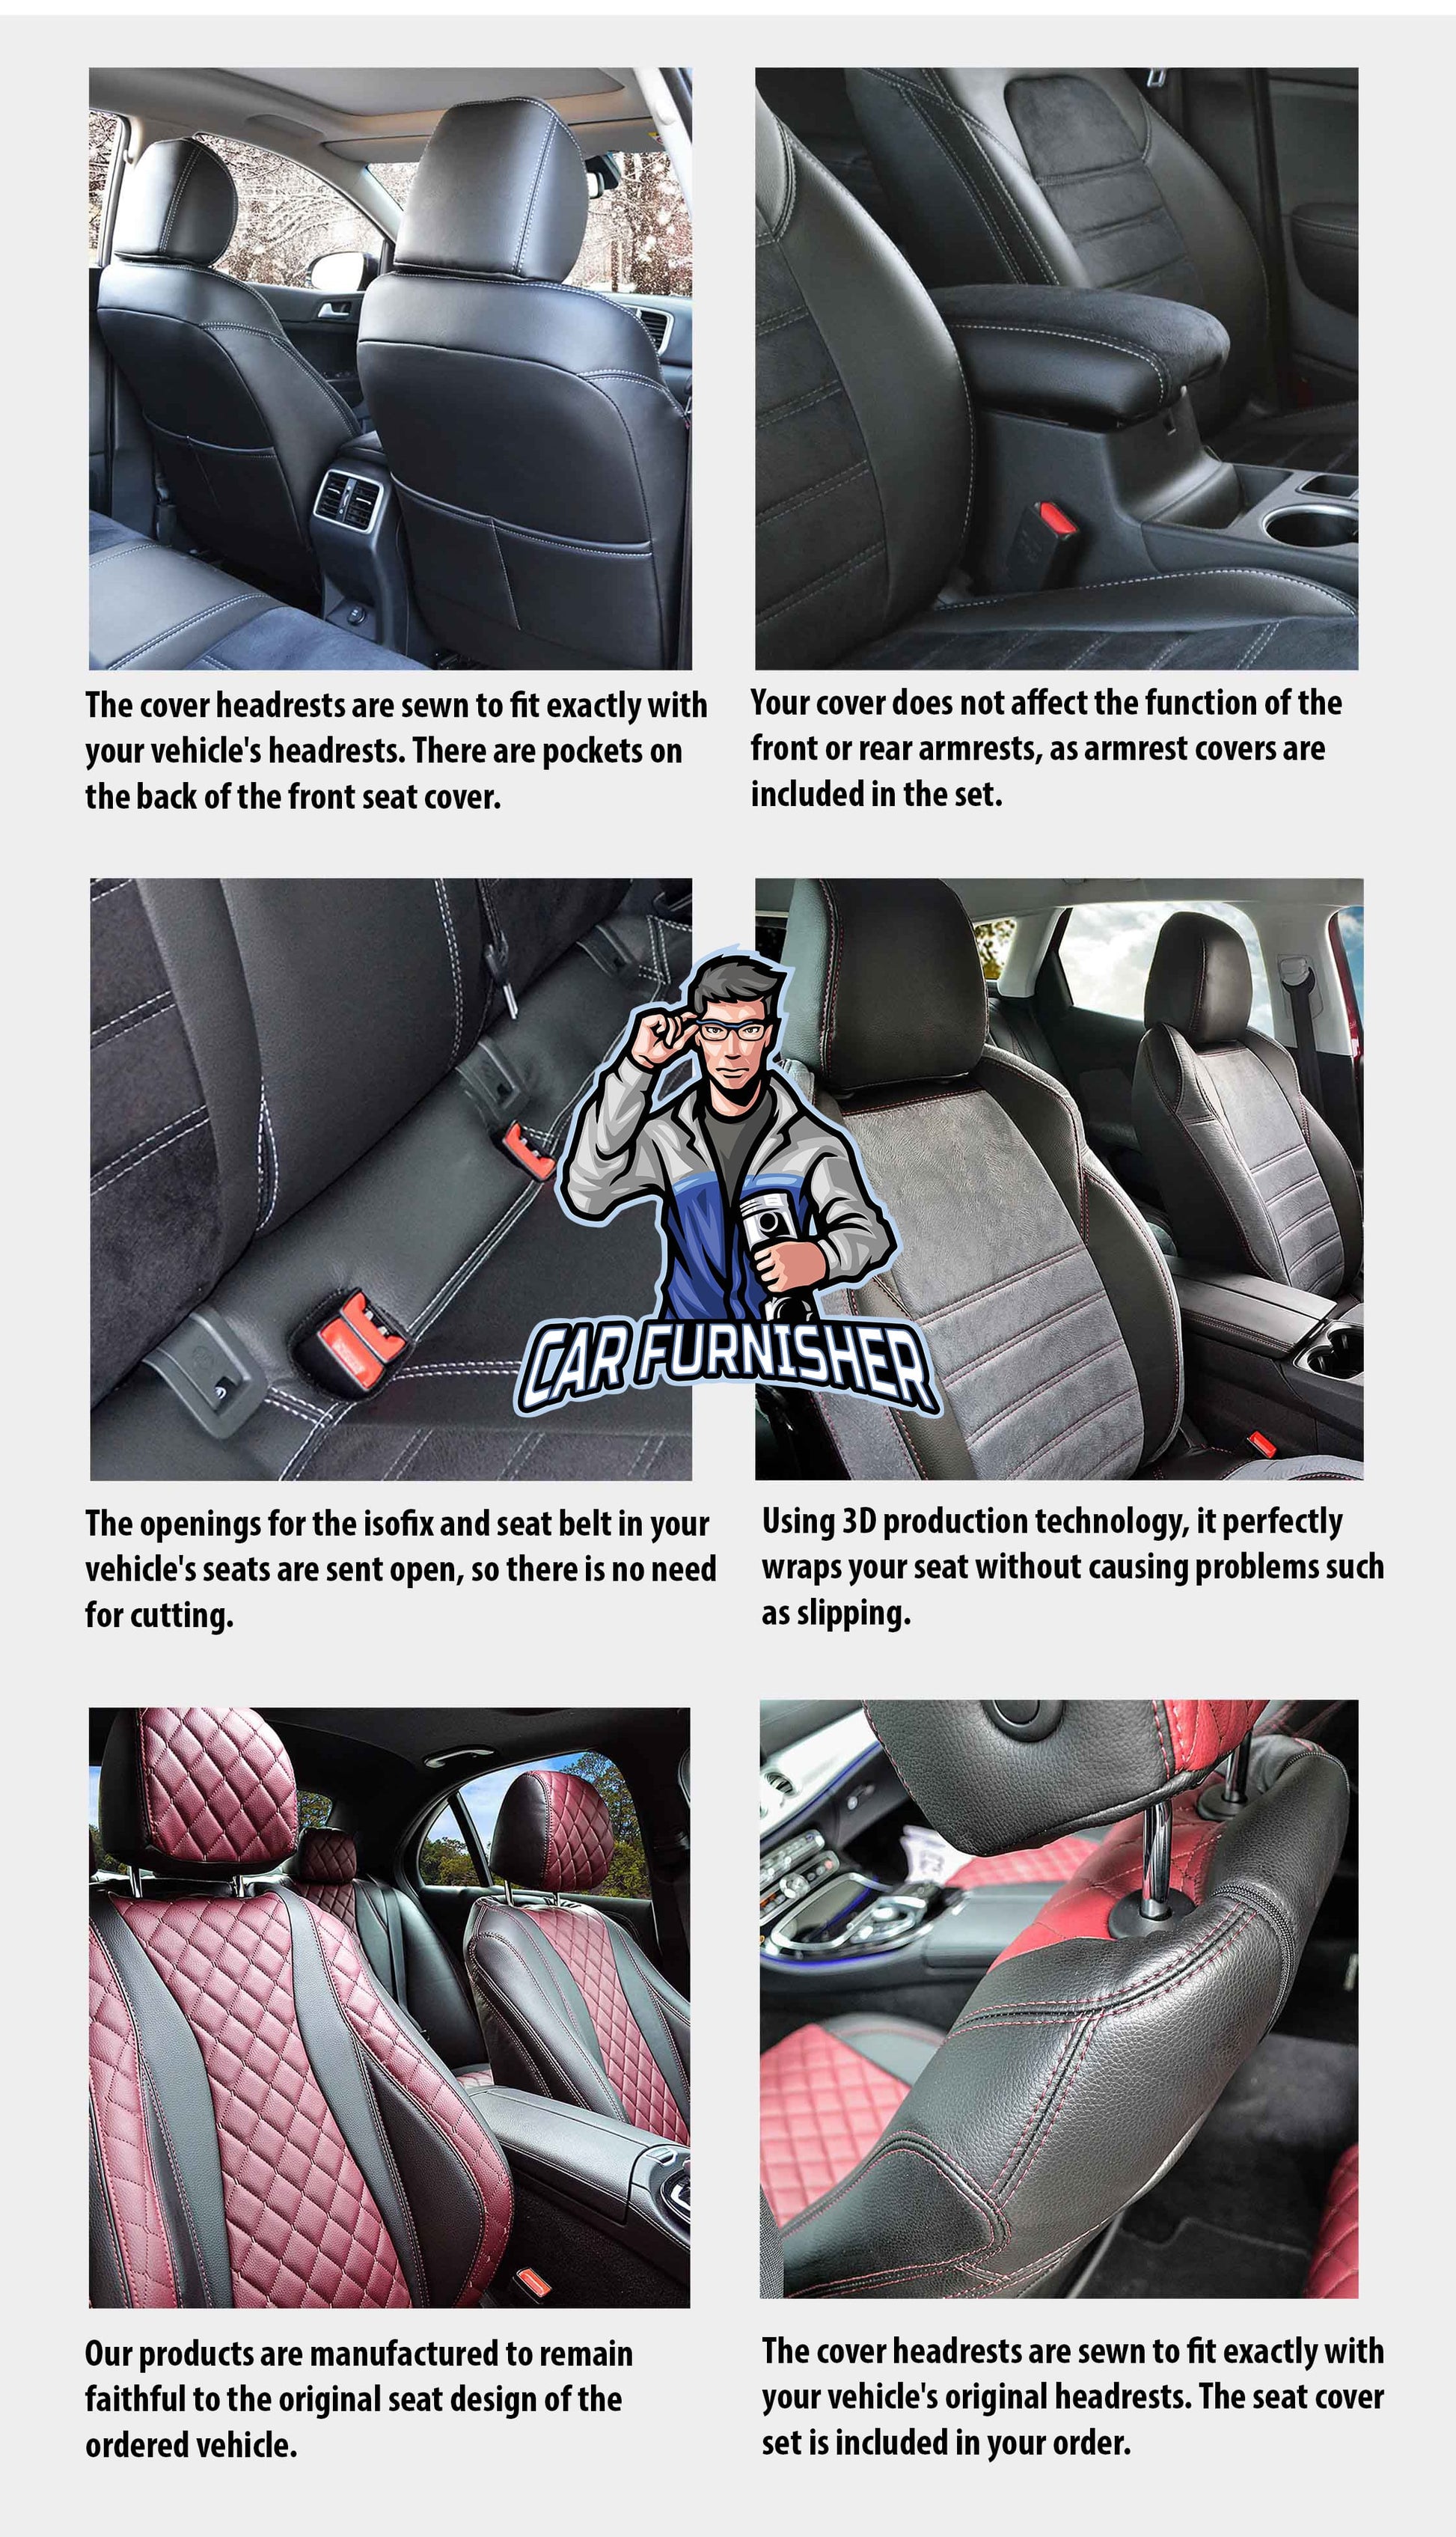 Fiat Linea Seat Covers Paris Leather & Jacquard Design Beige Leather & Jacquard Fabric